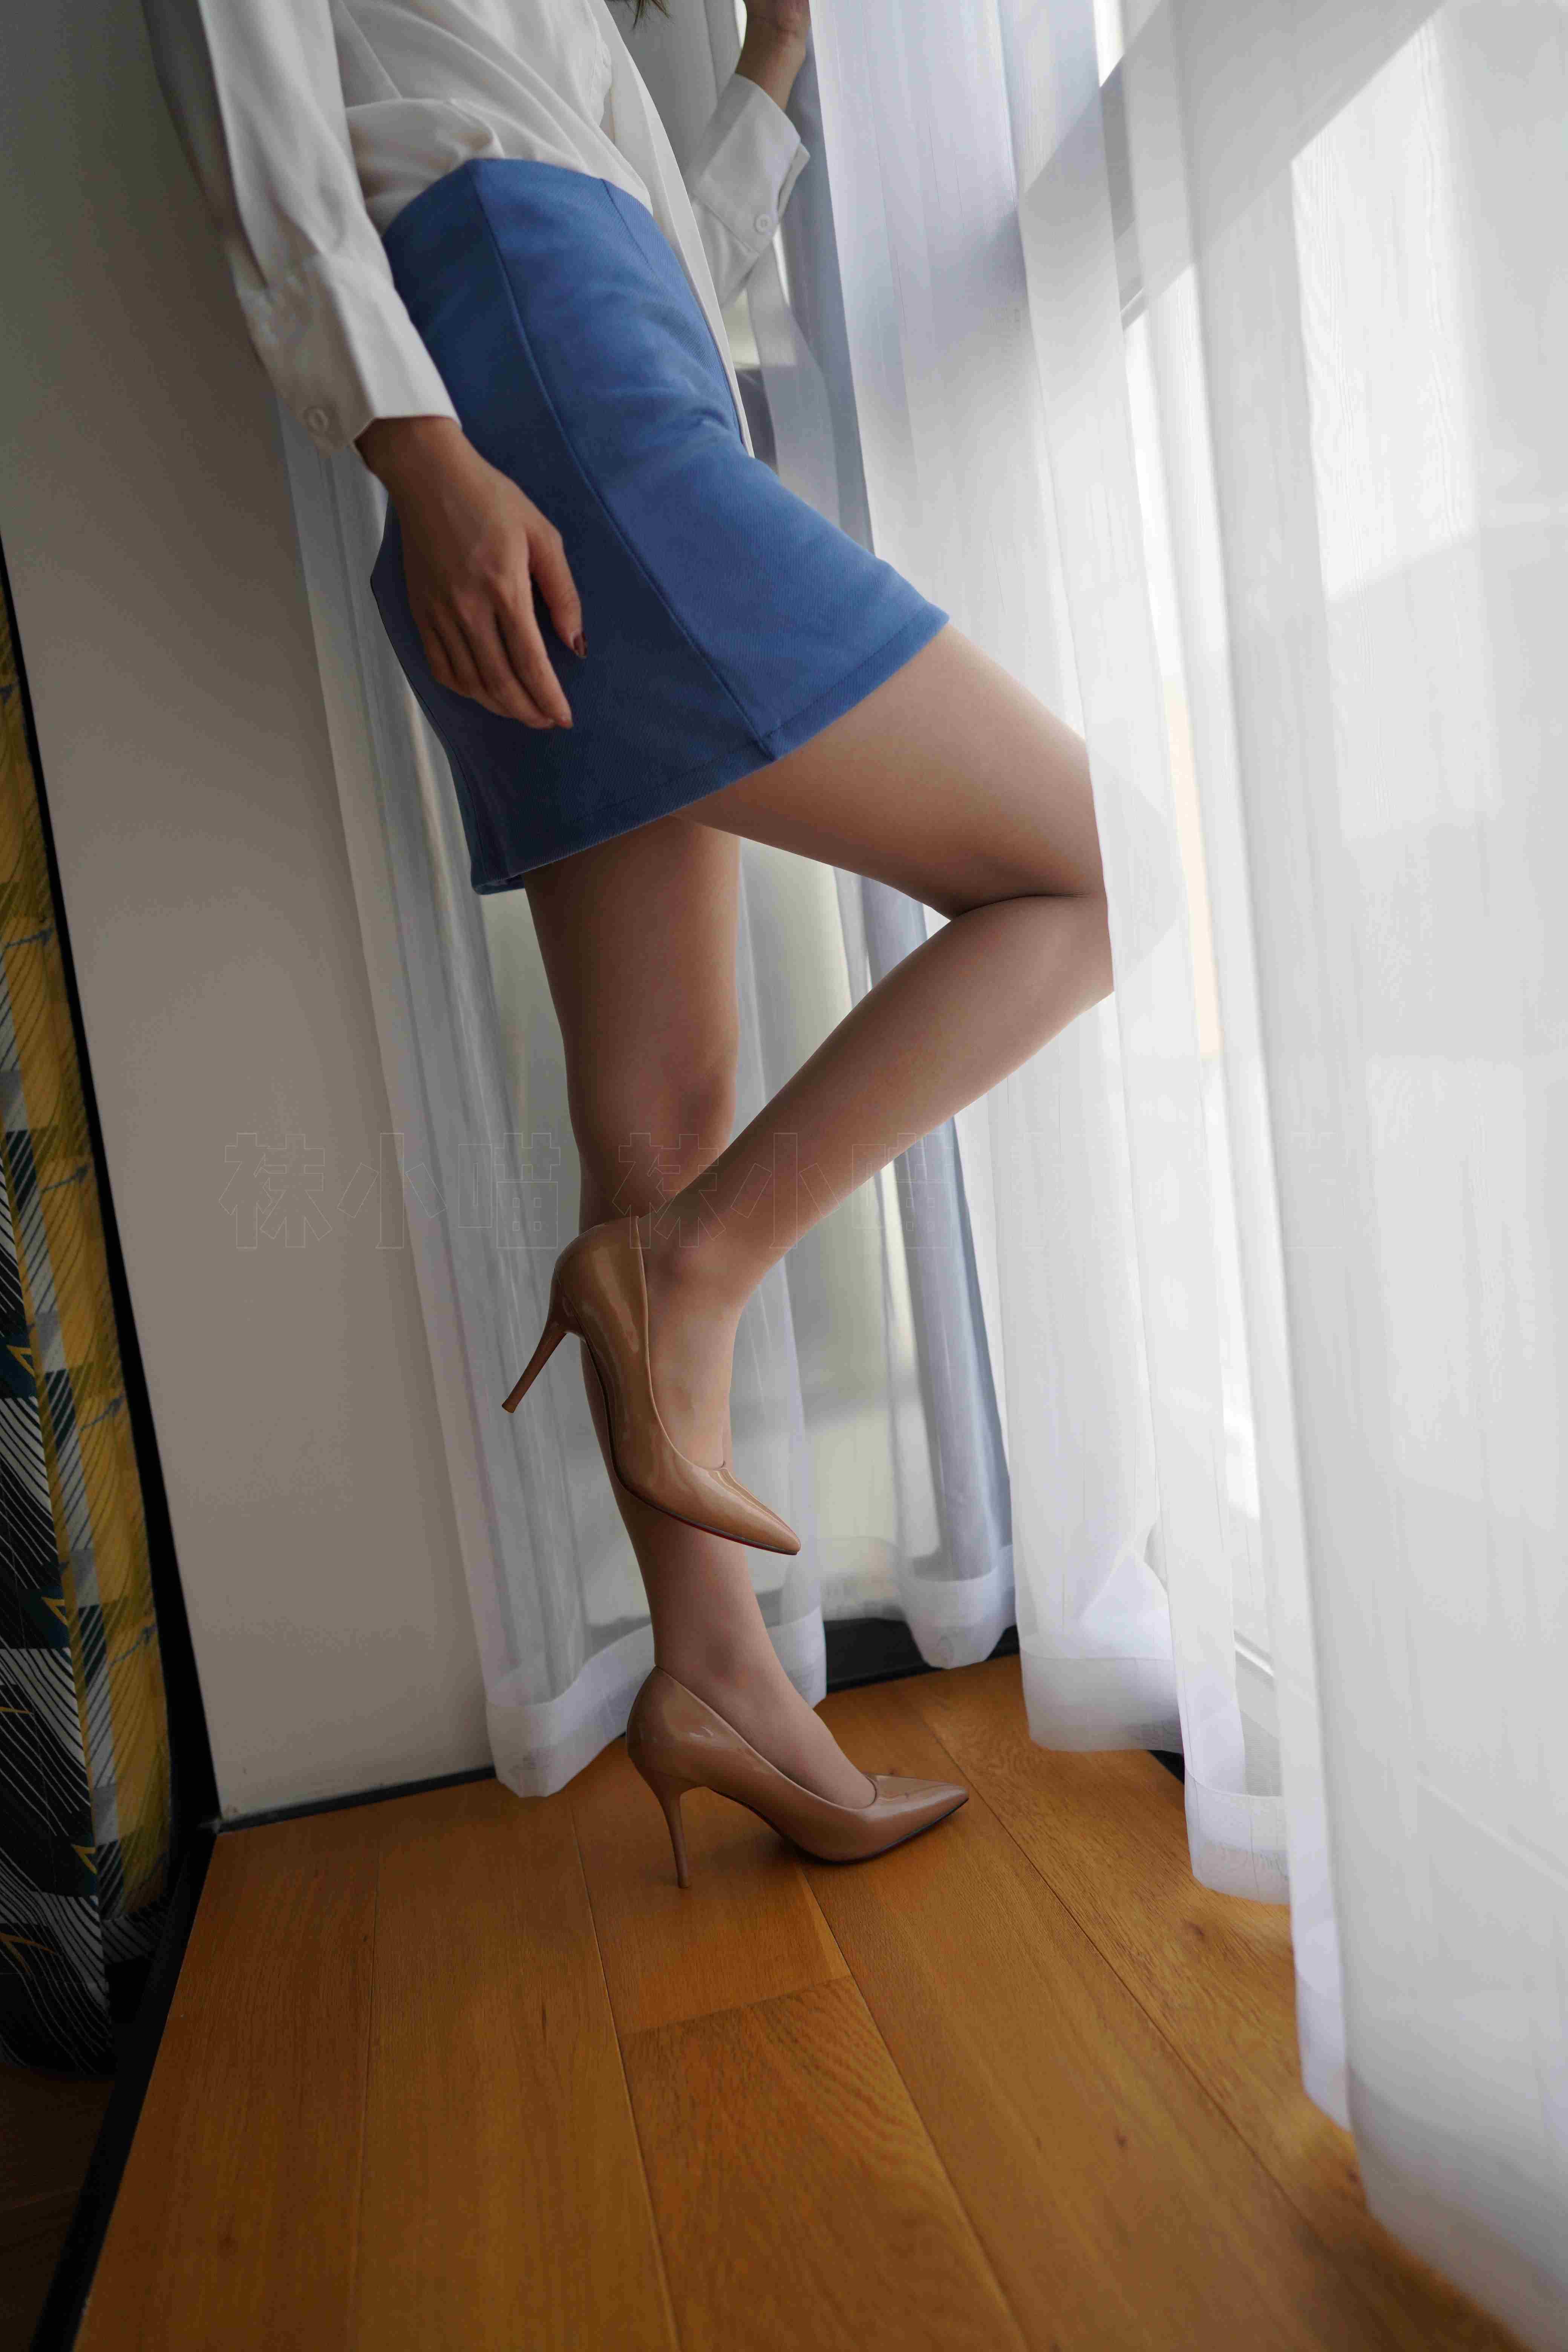 China Beauty Legs and feet 66